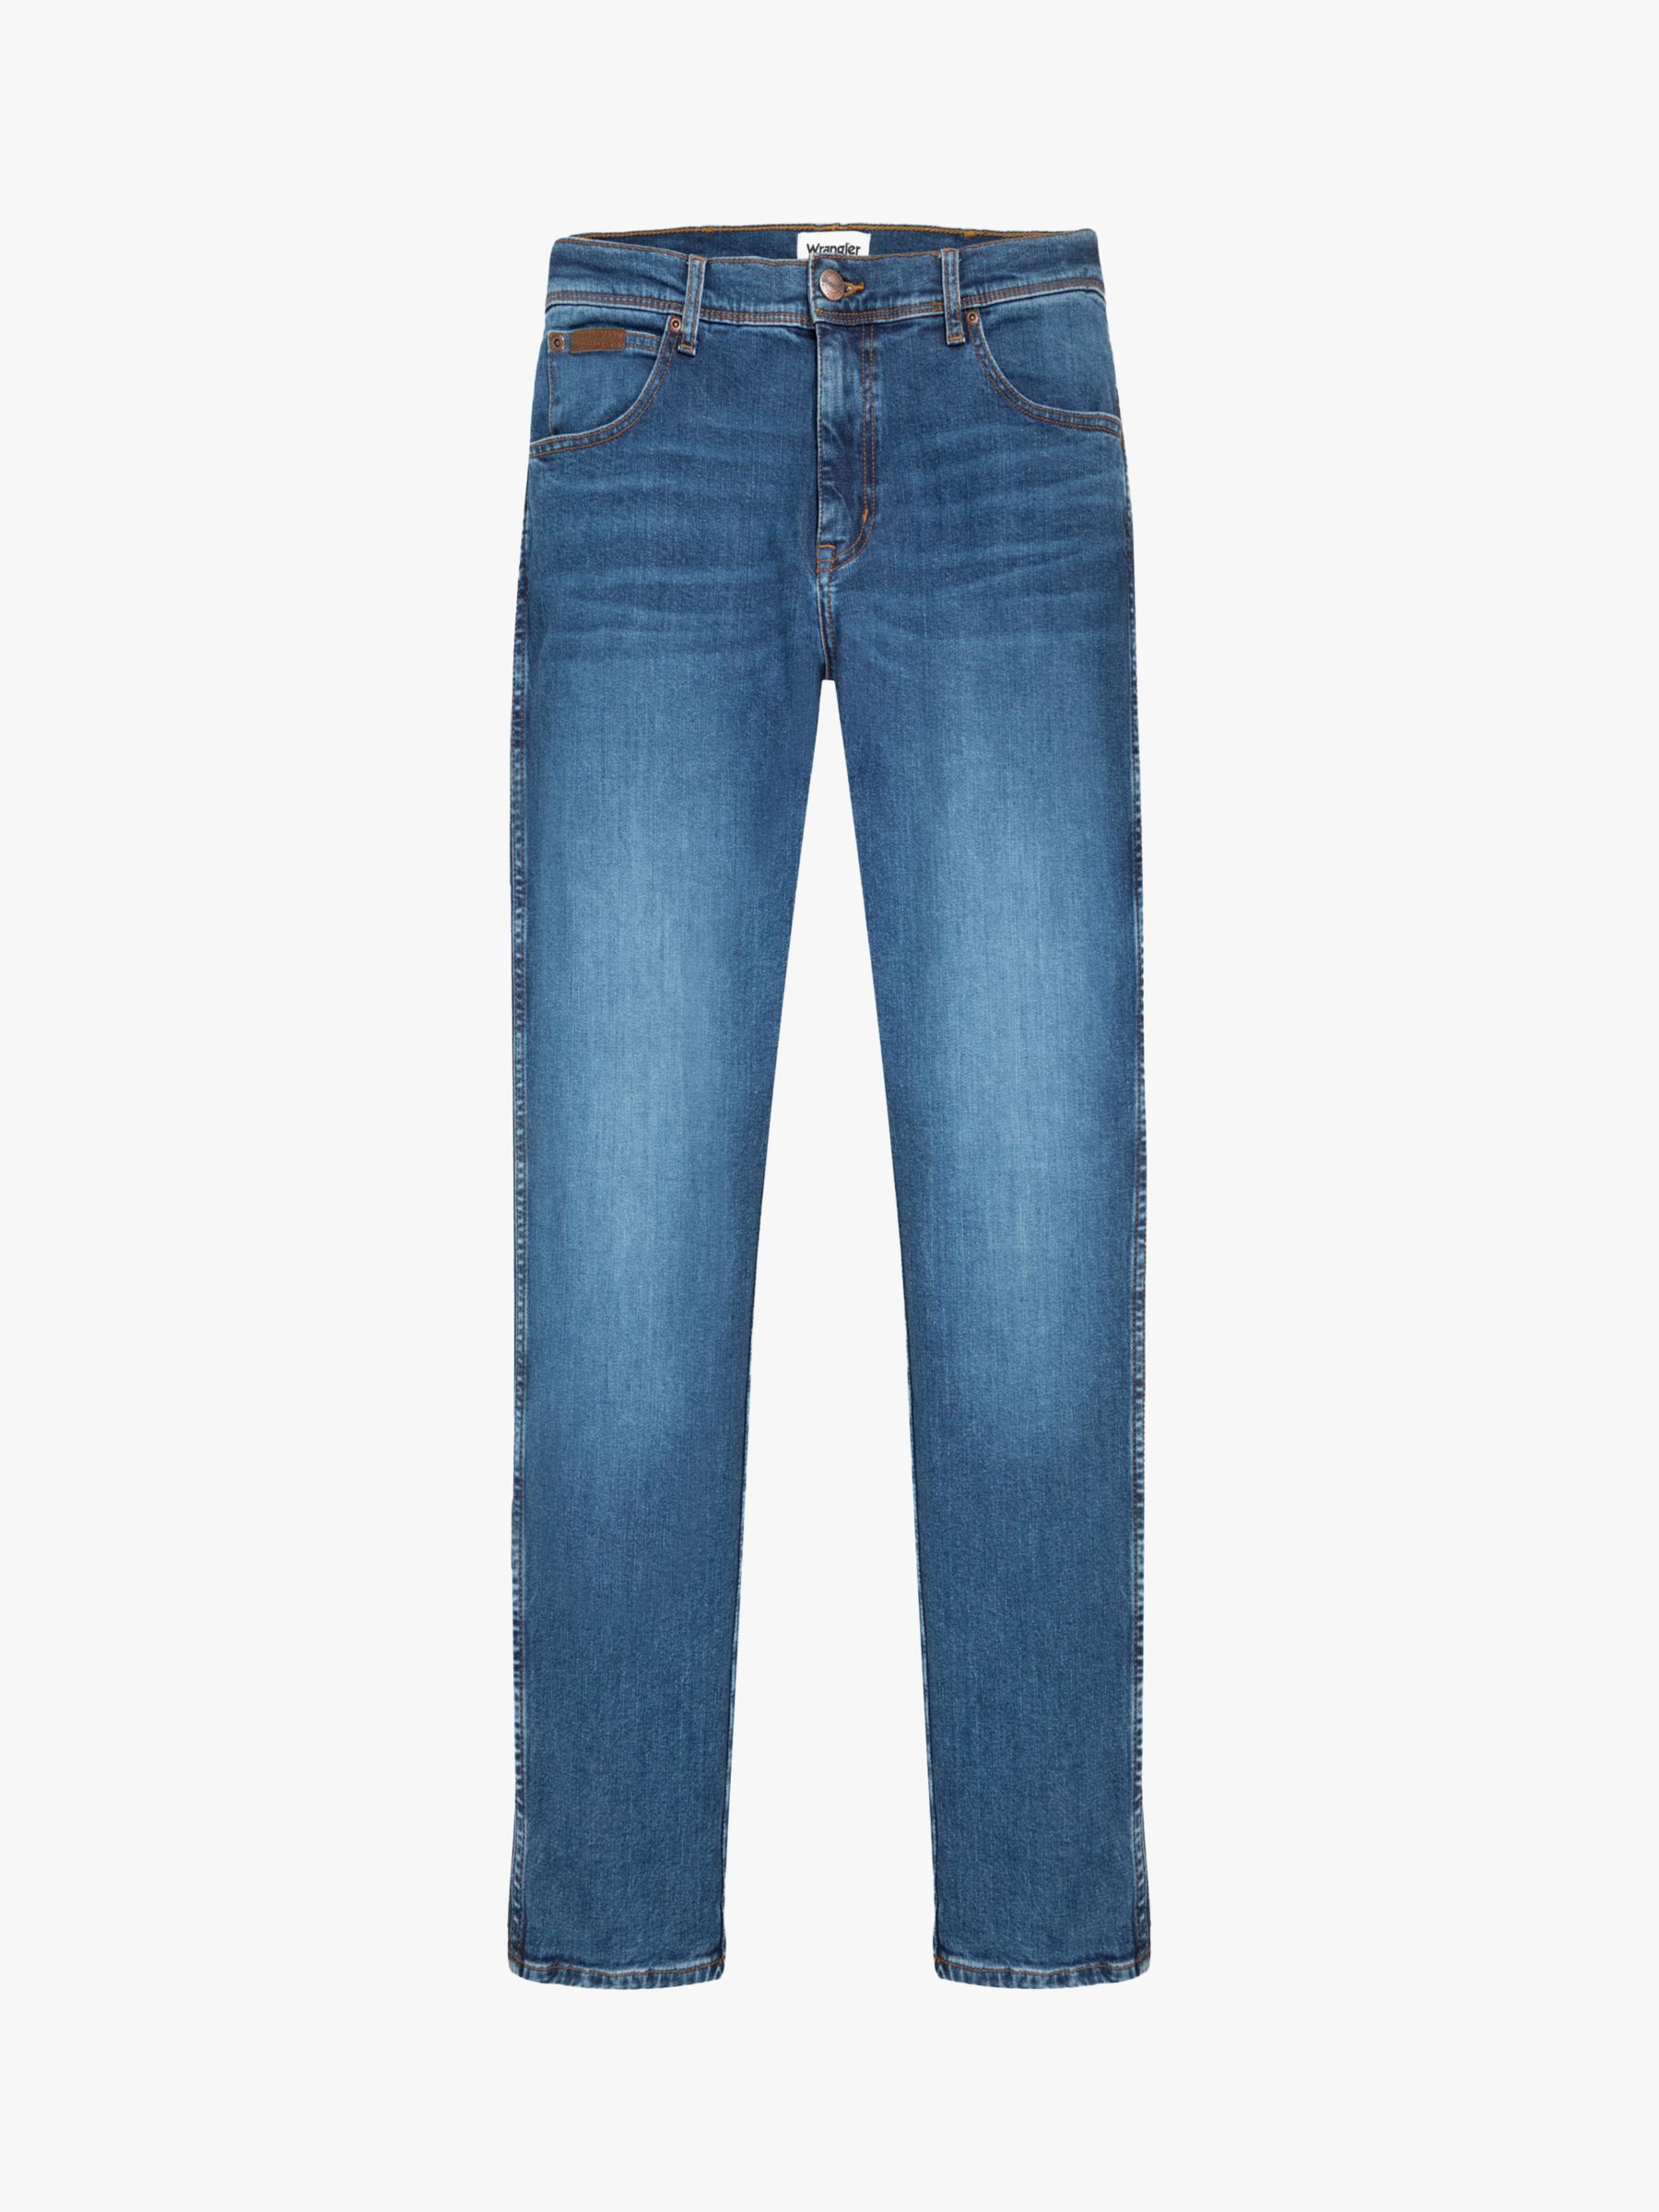 Wrangler Texas Slim Fit Jeans, Blue at John Lewis & Partners